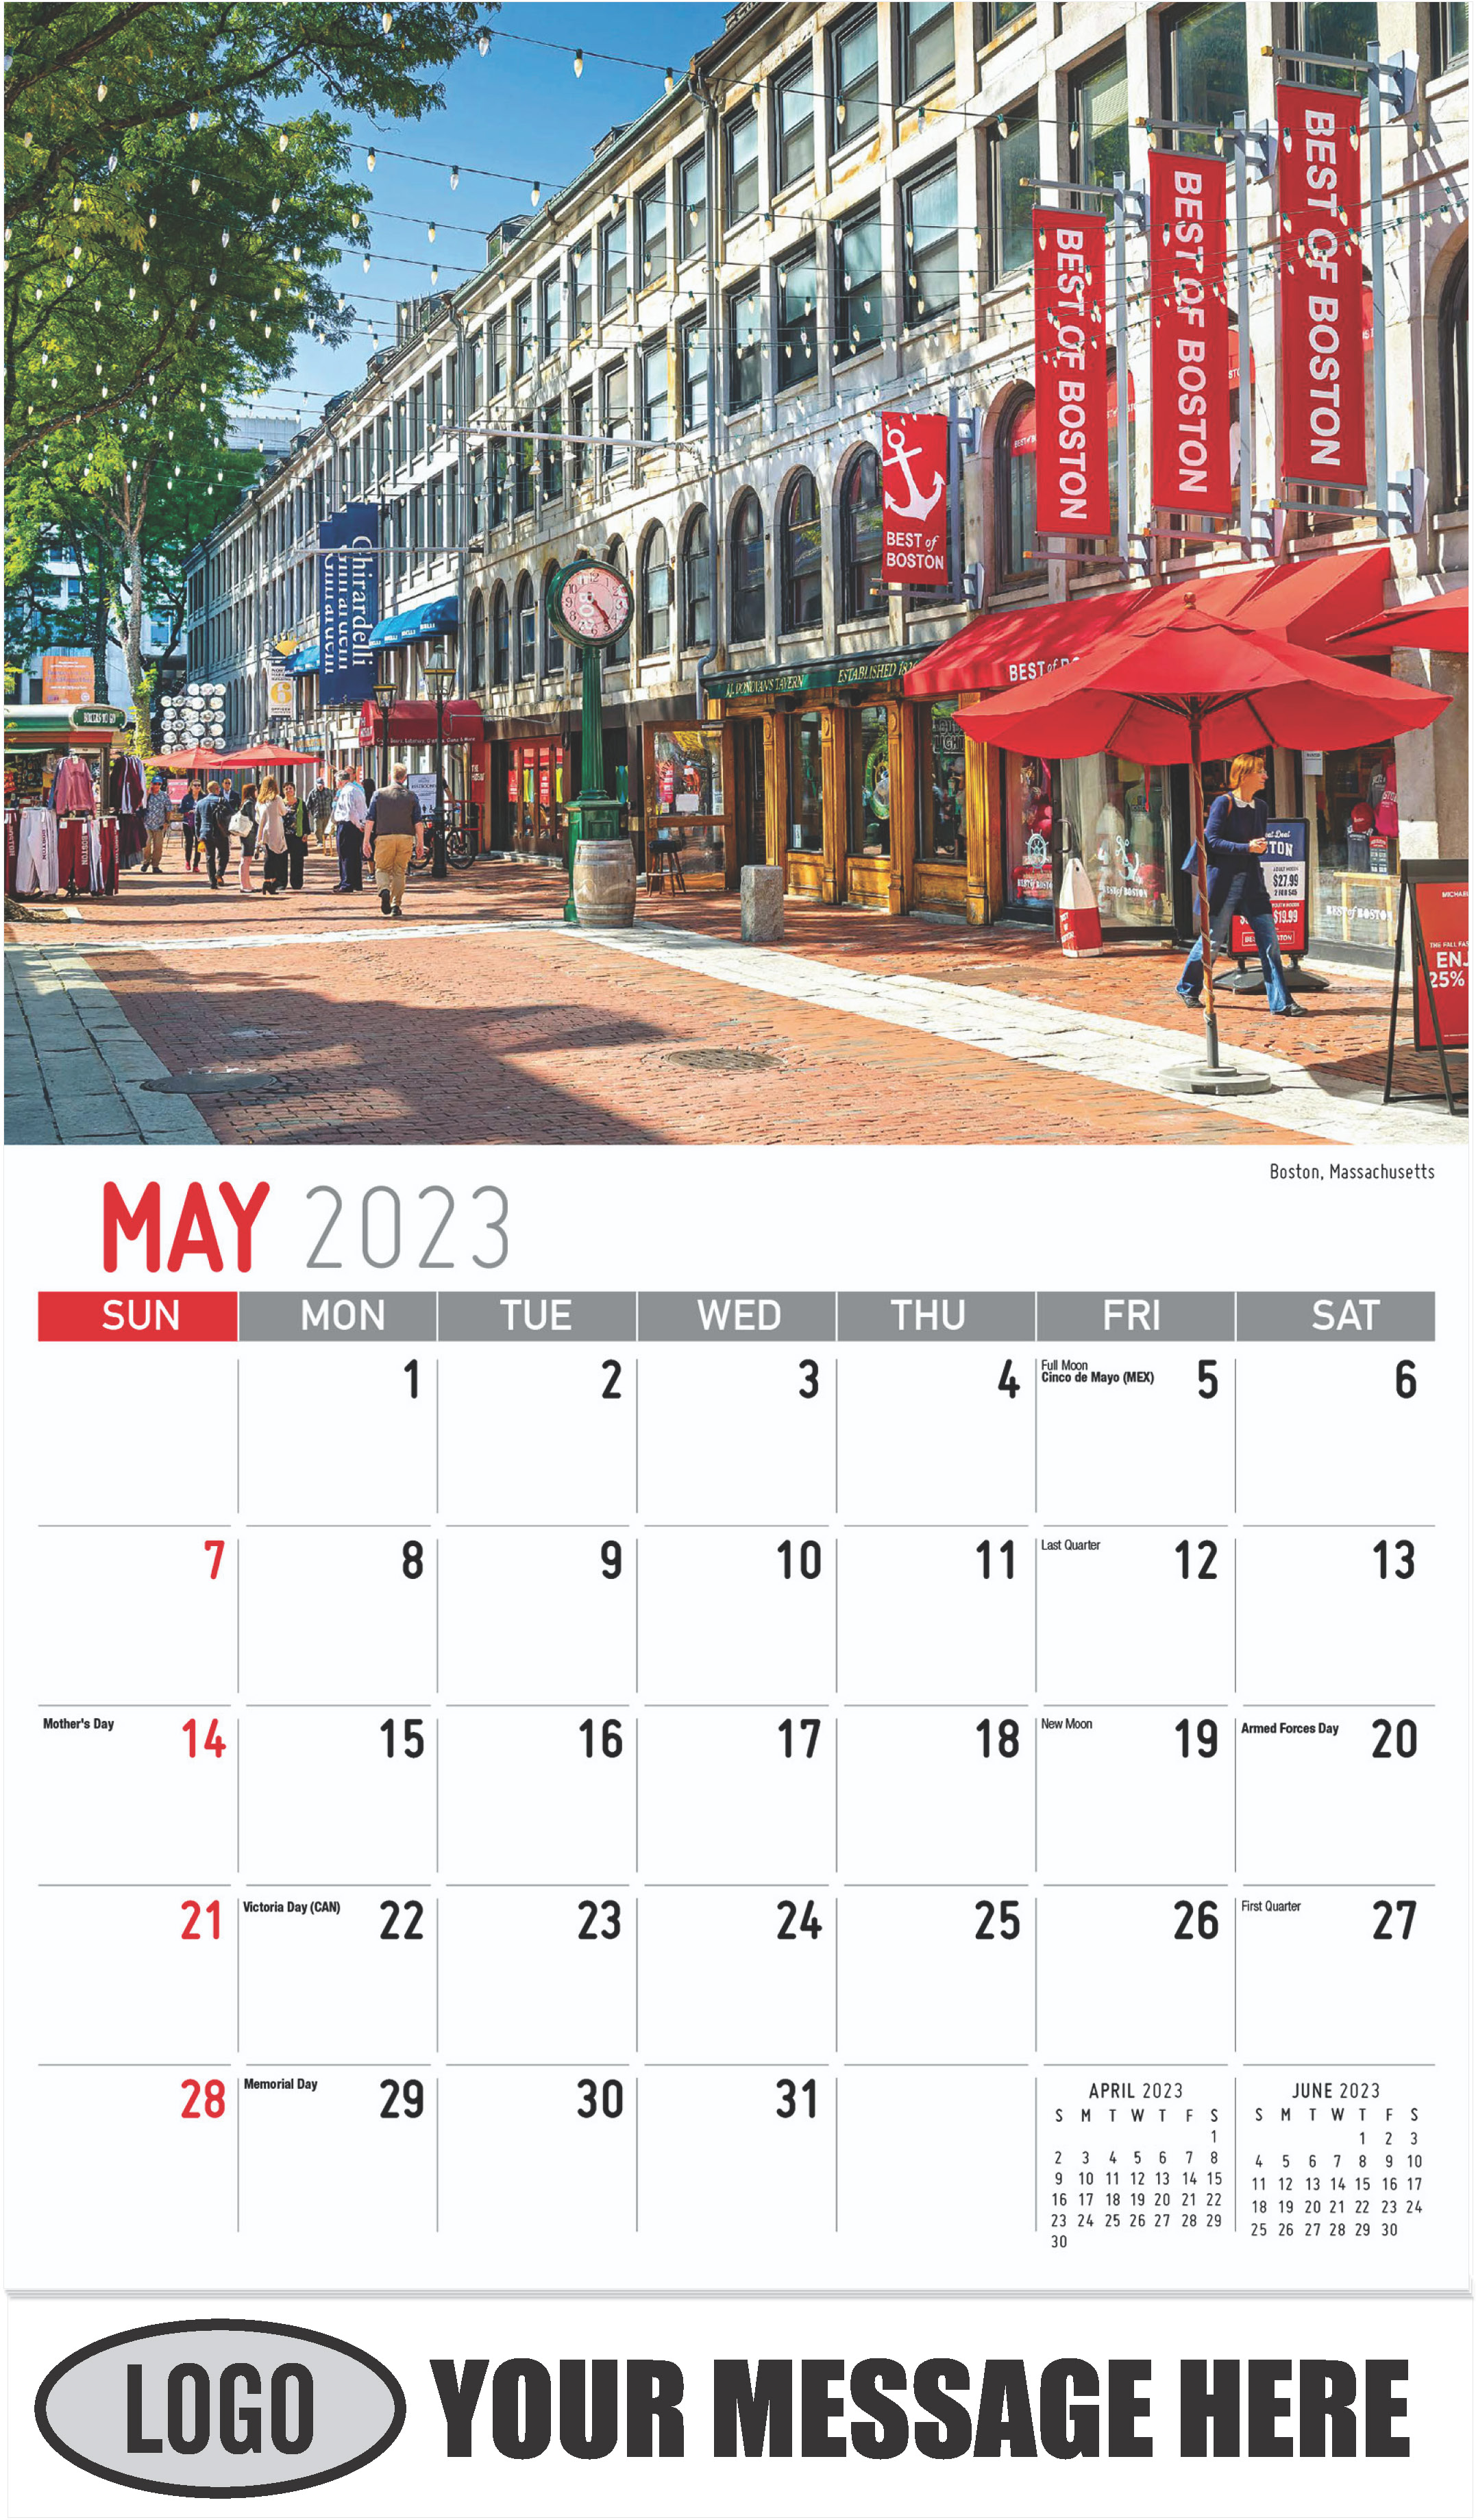 Boston, Massachusetts - May - Scenes of New England 2023 Promotional Calendar